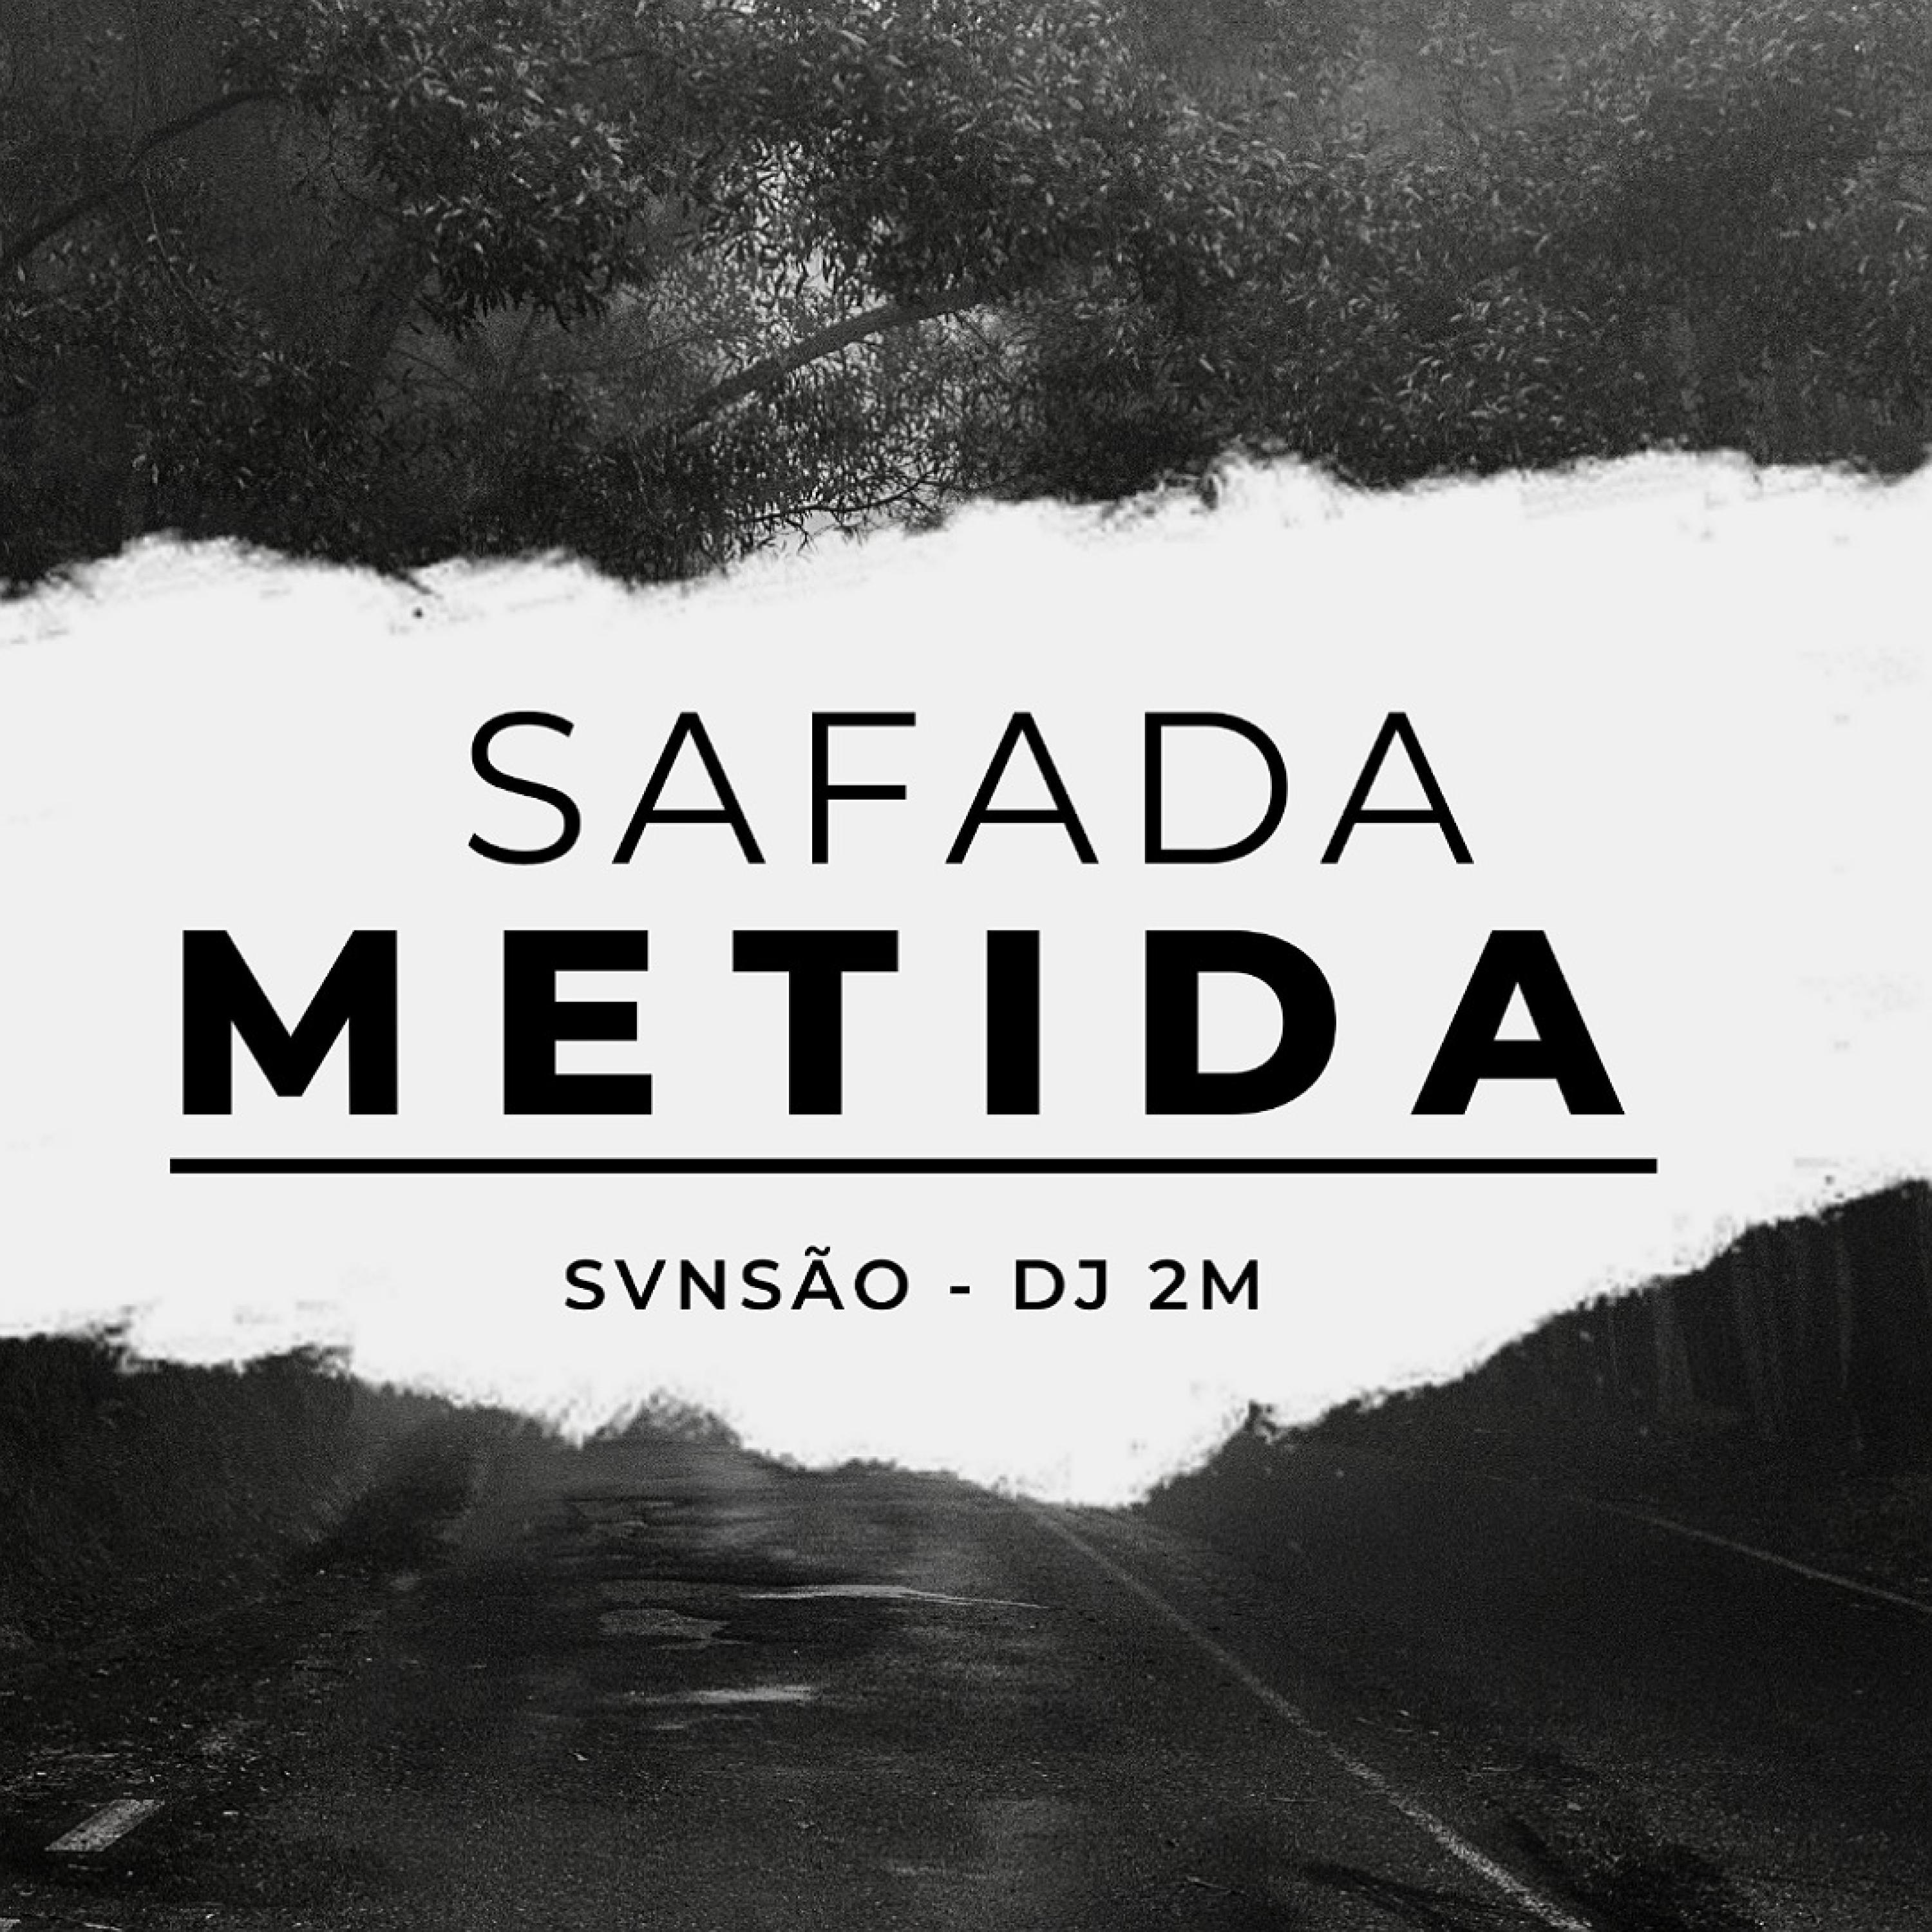 dj 2m - Safada Metida (feat. Svnsão)